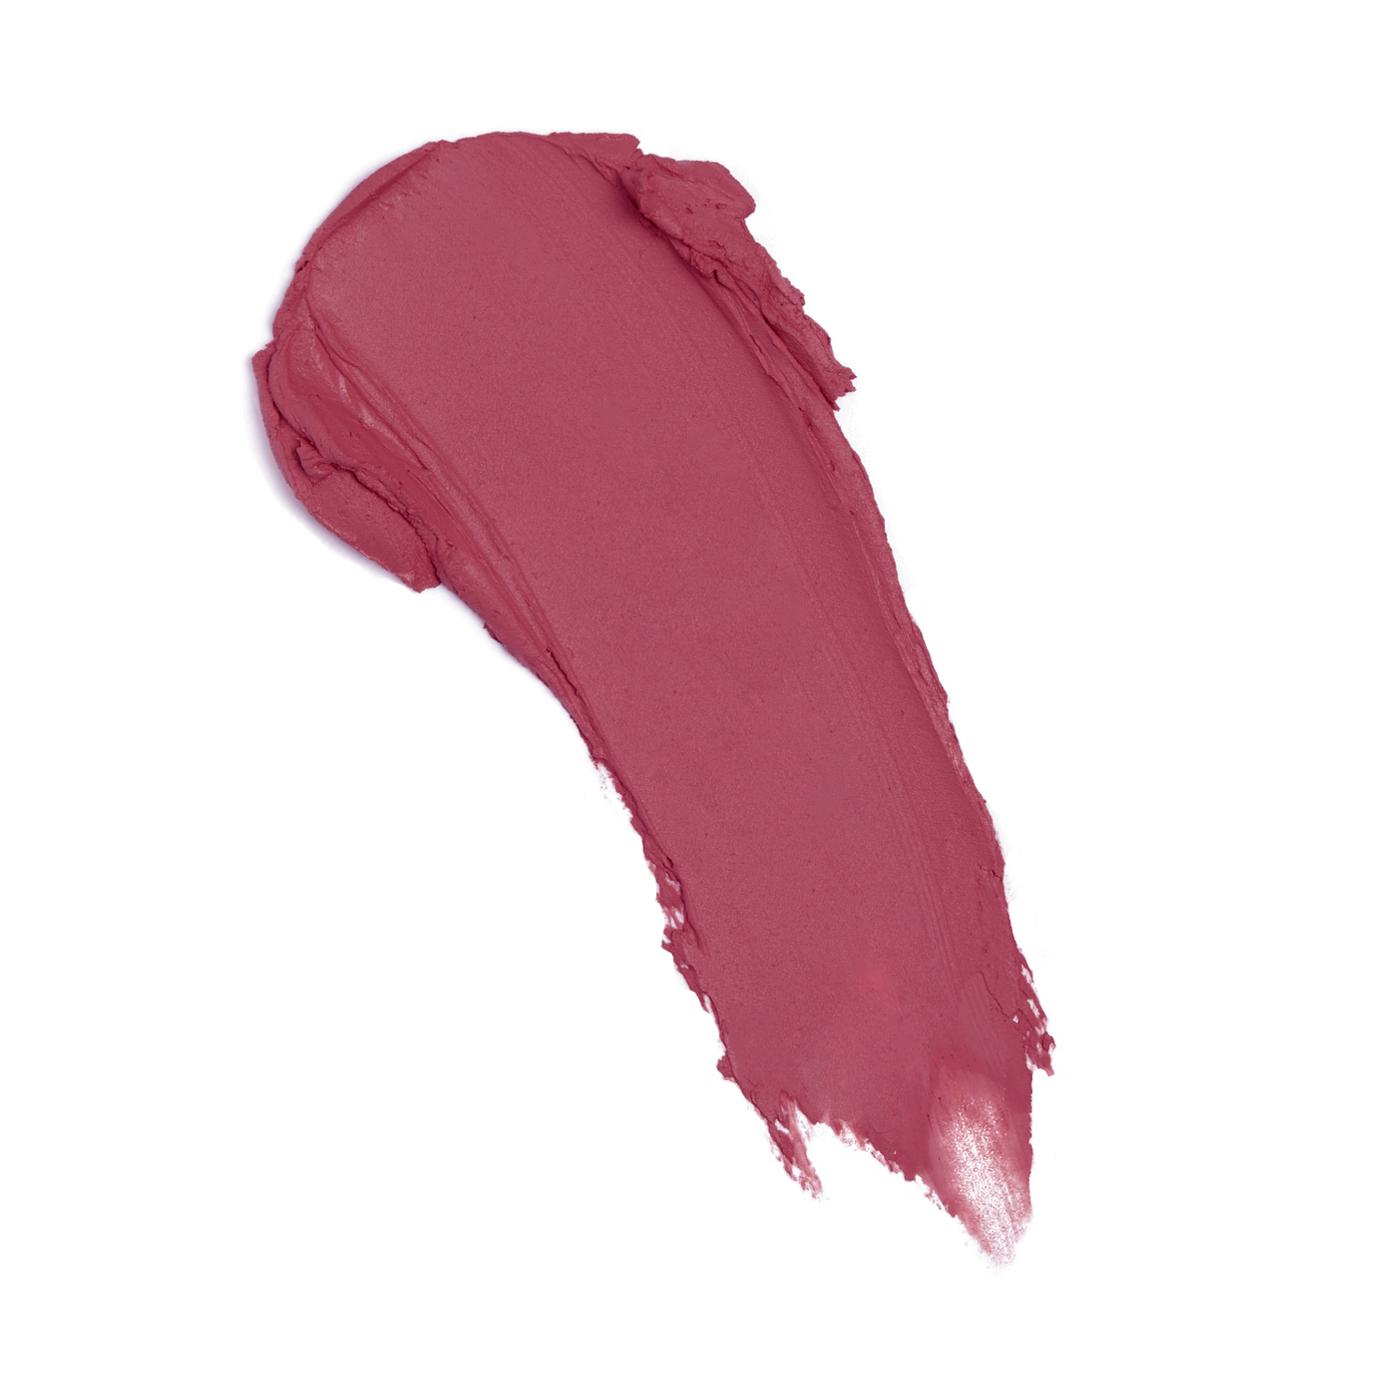 Makeup Revolution Lip Allure Soft Satin Lipstick - Berry Boss; image 2 of 2